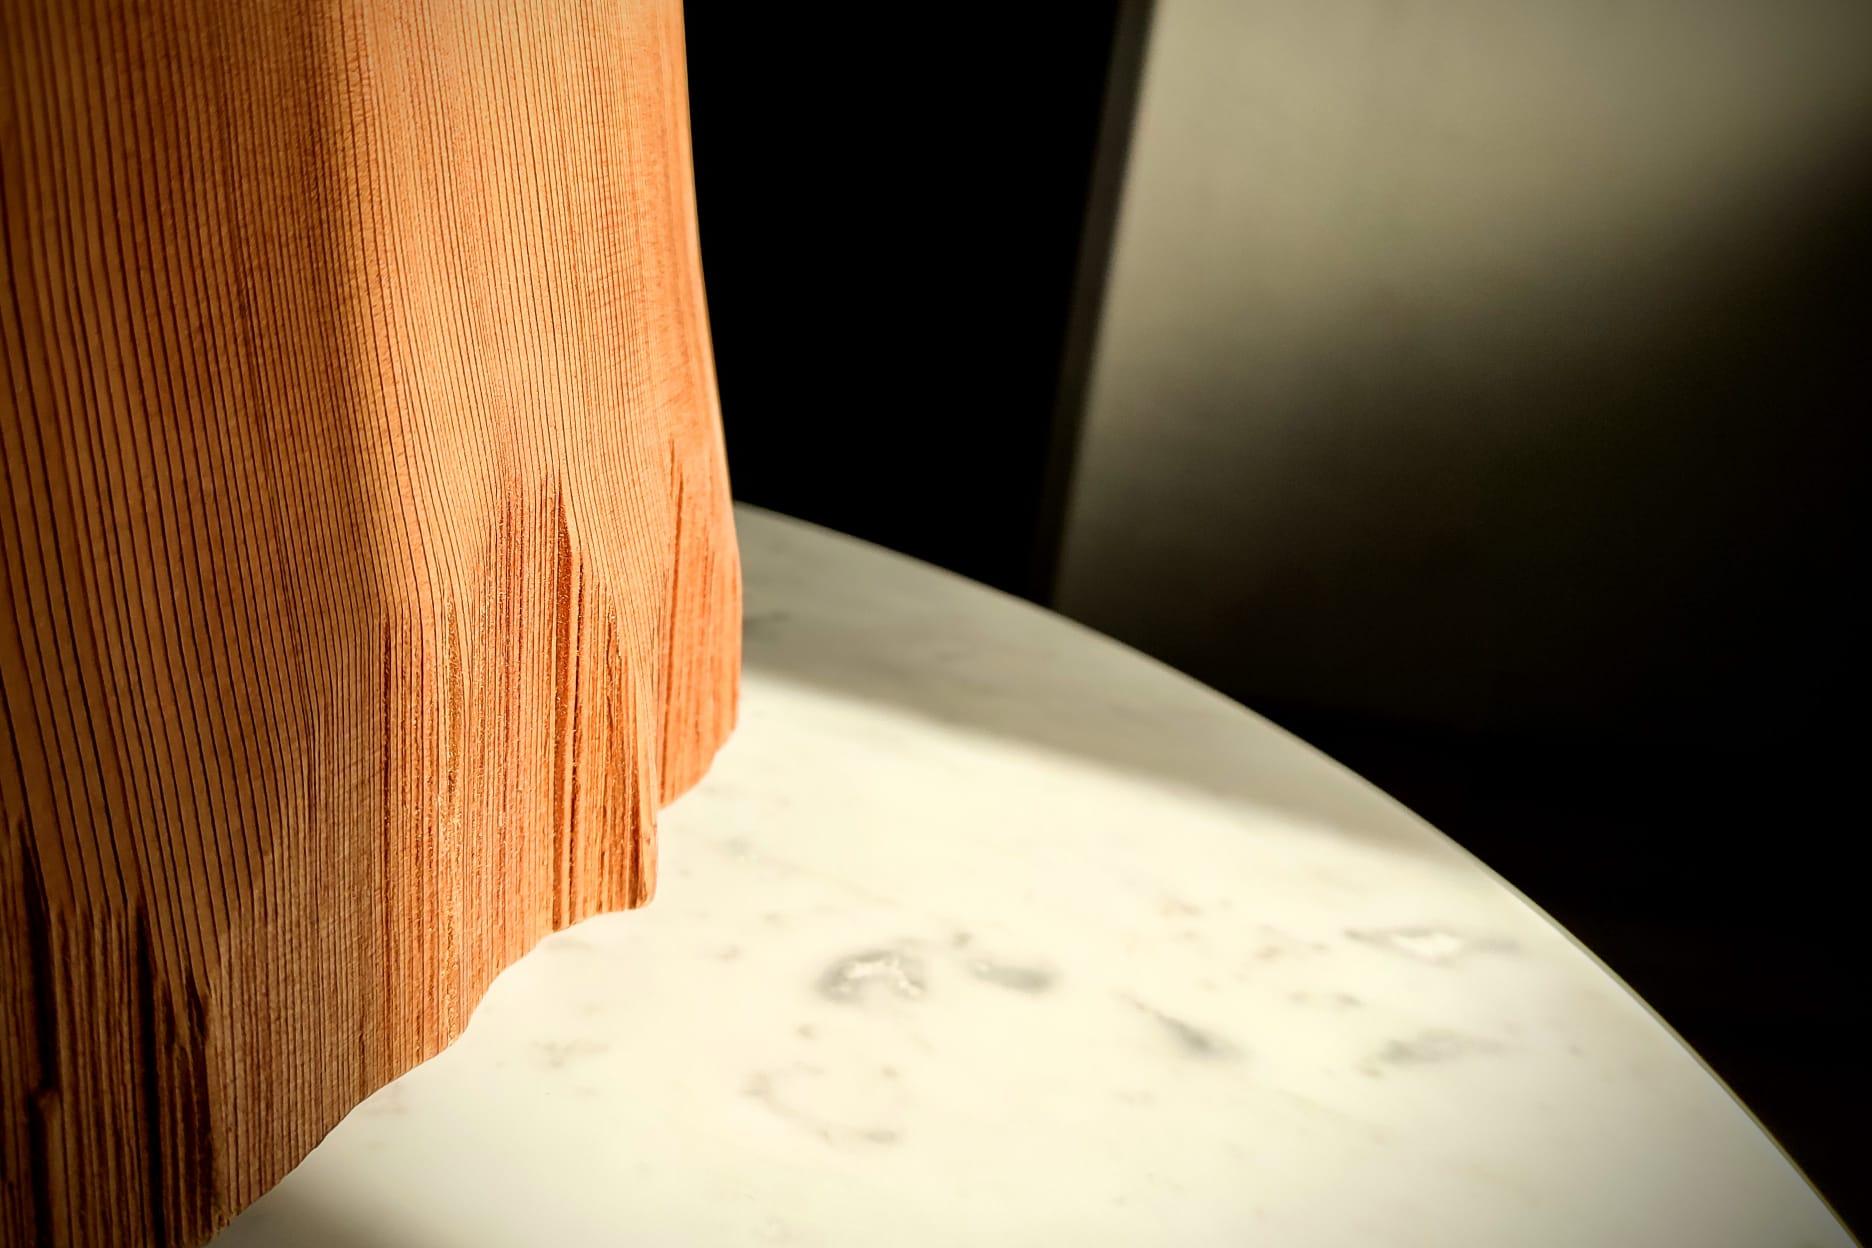 Japanese Cedar Wood Box with Arita Porcelain Vase 'Hope' by Mario Trimarchi 3